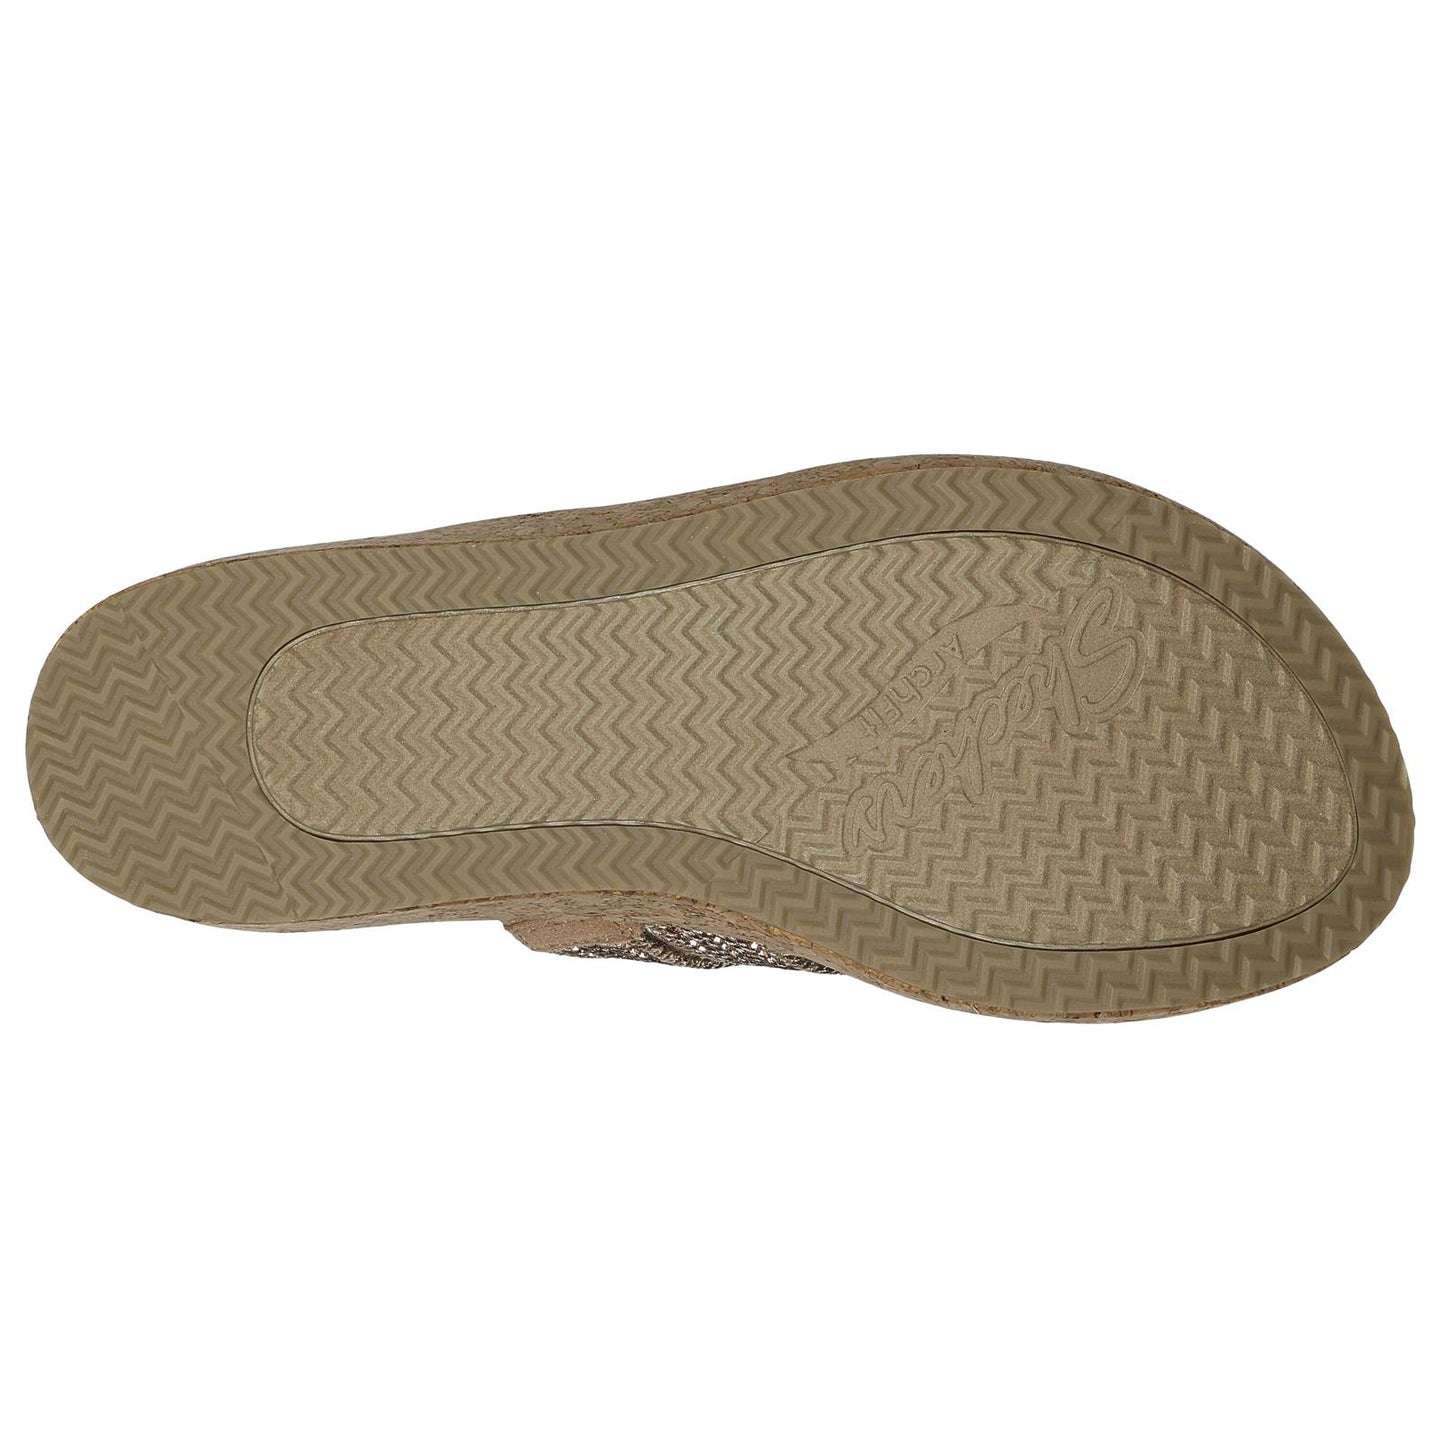 Skechers Arch Fit Beverlee Always Classy Gold Slip On Wedge Sandals